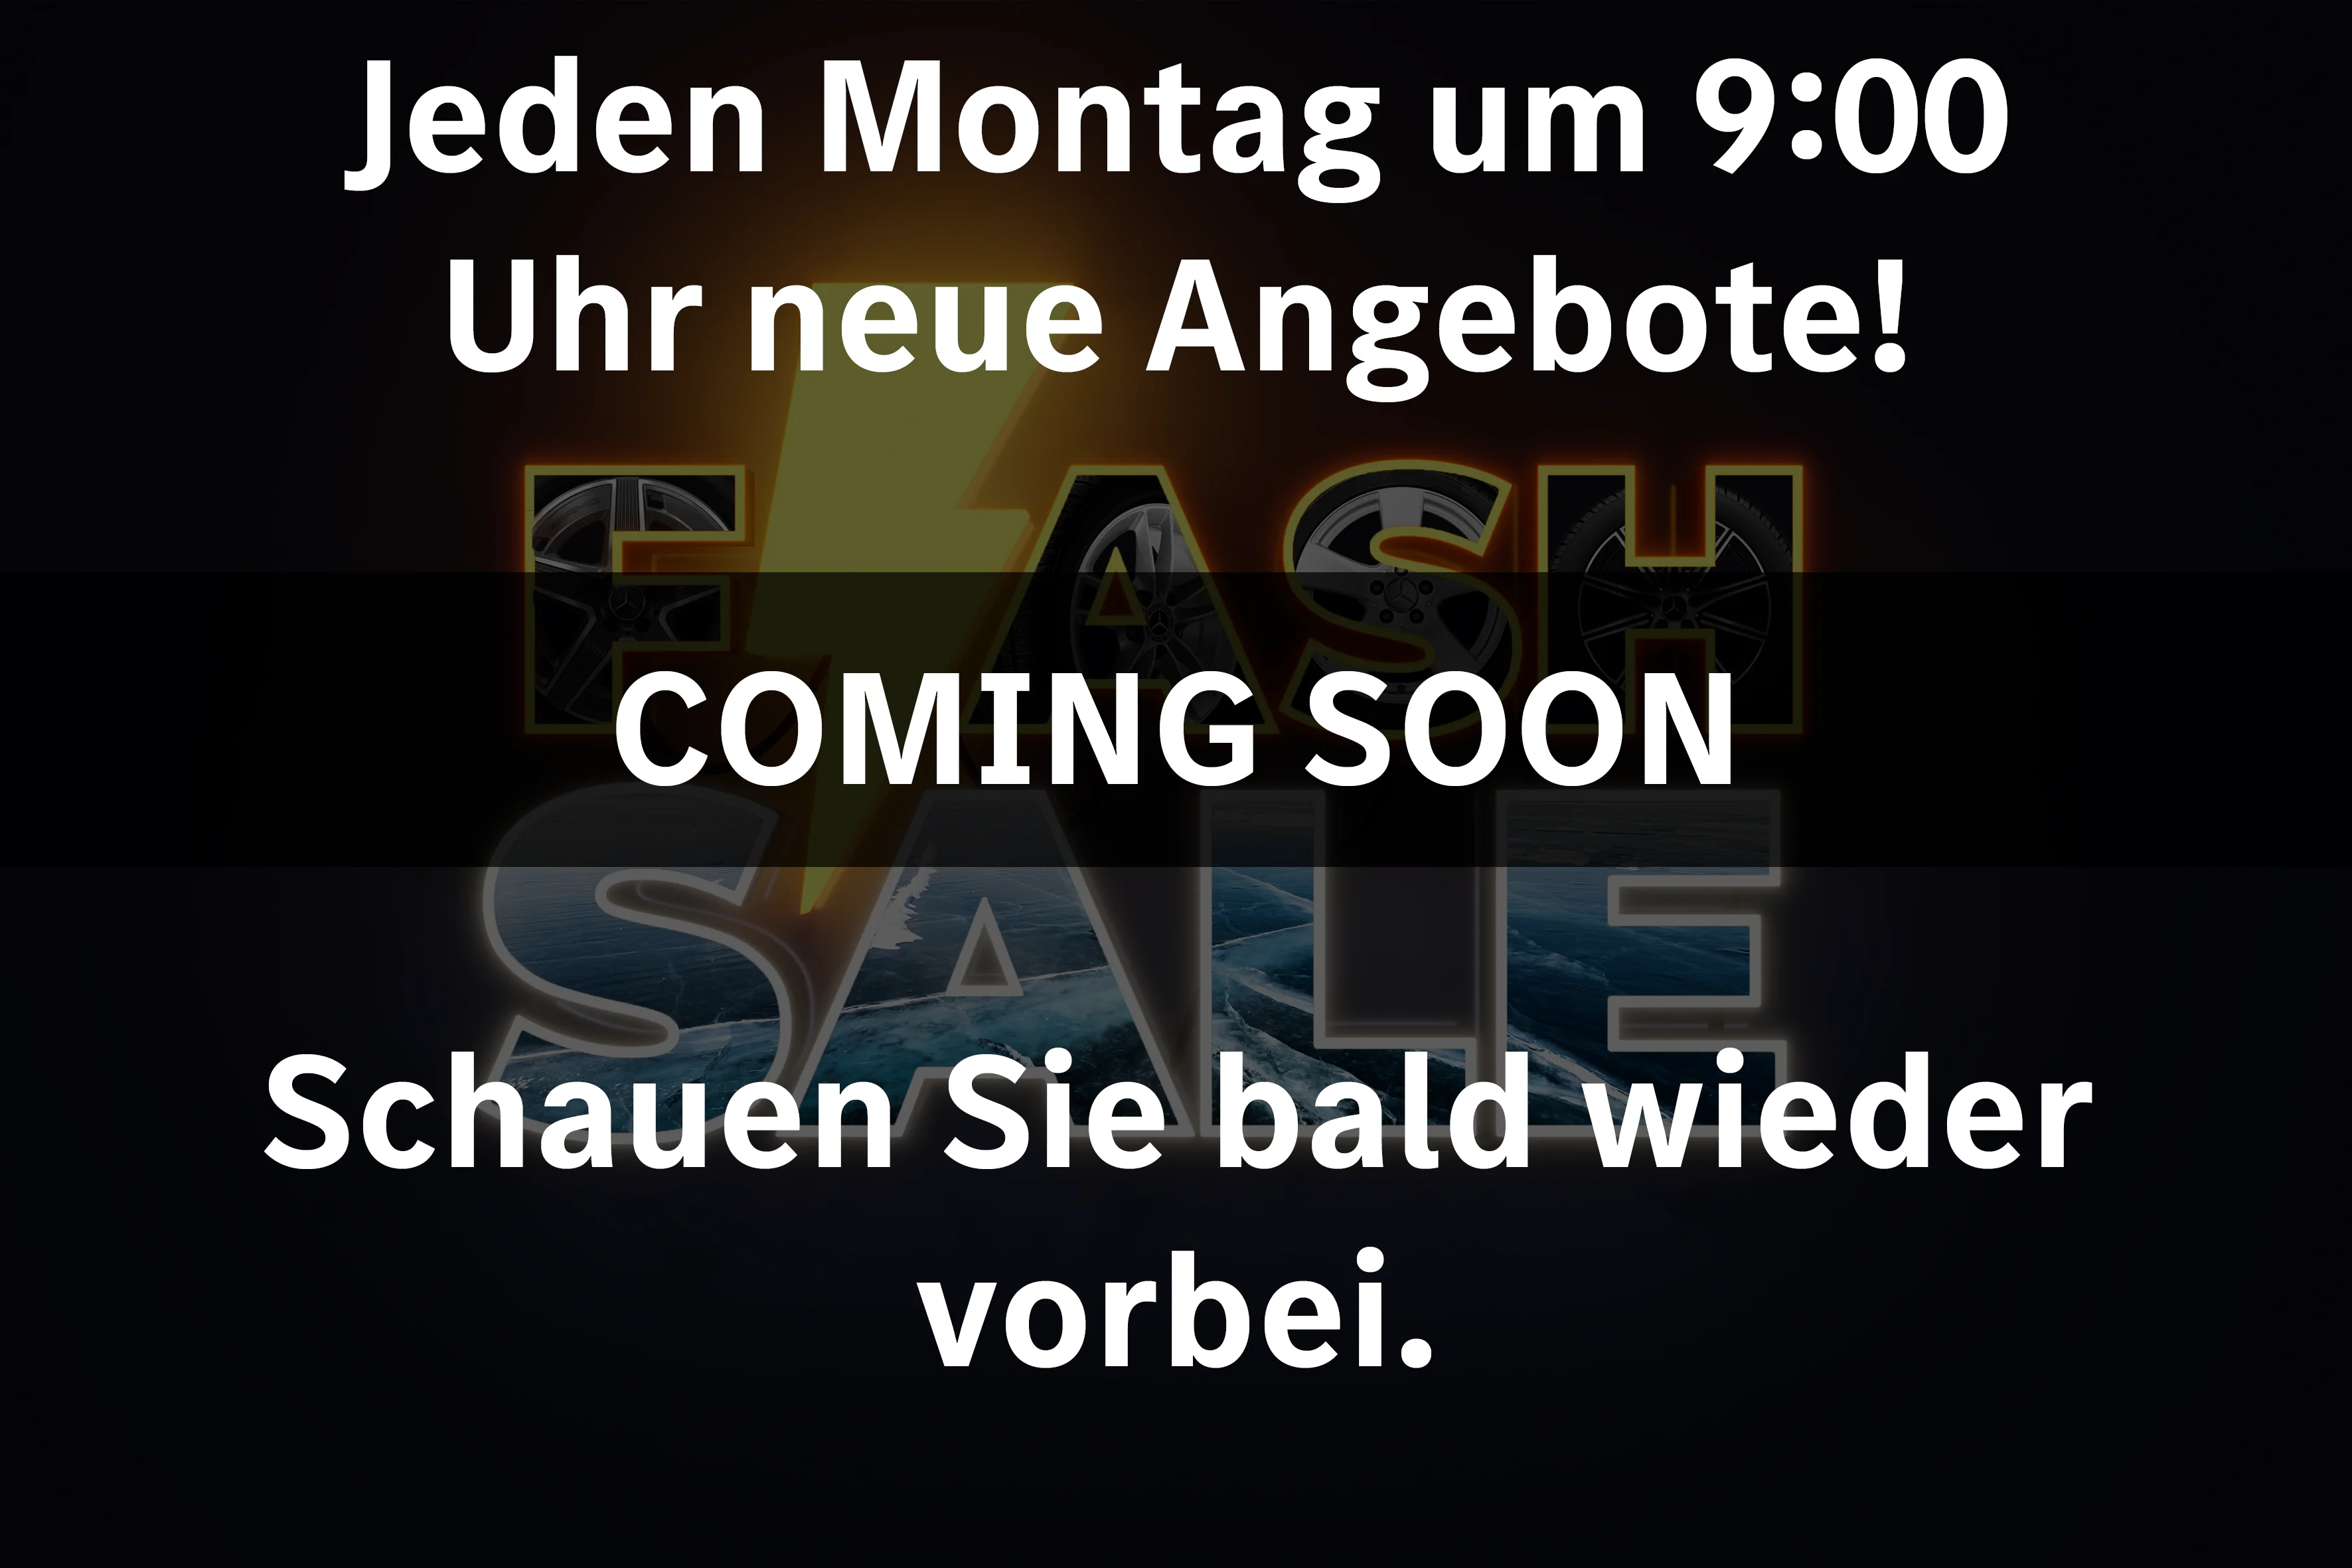 Flash Sale - Coming Soon